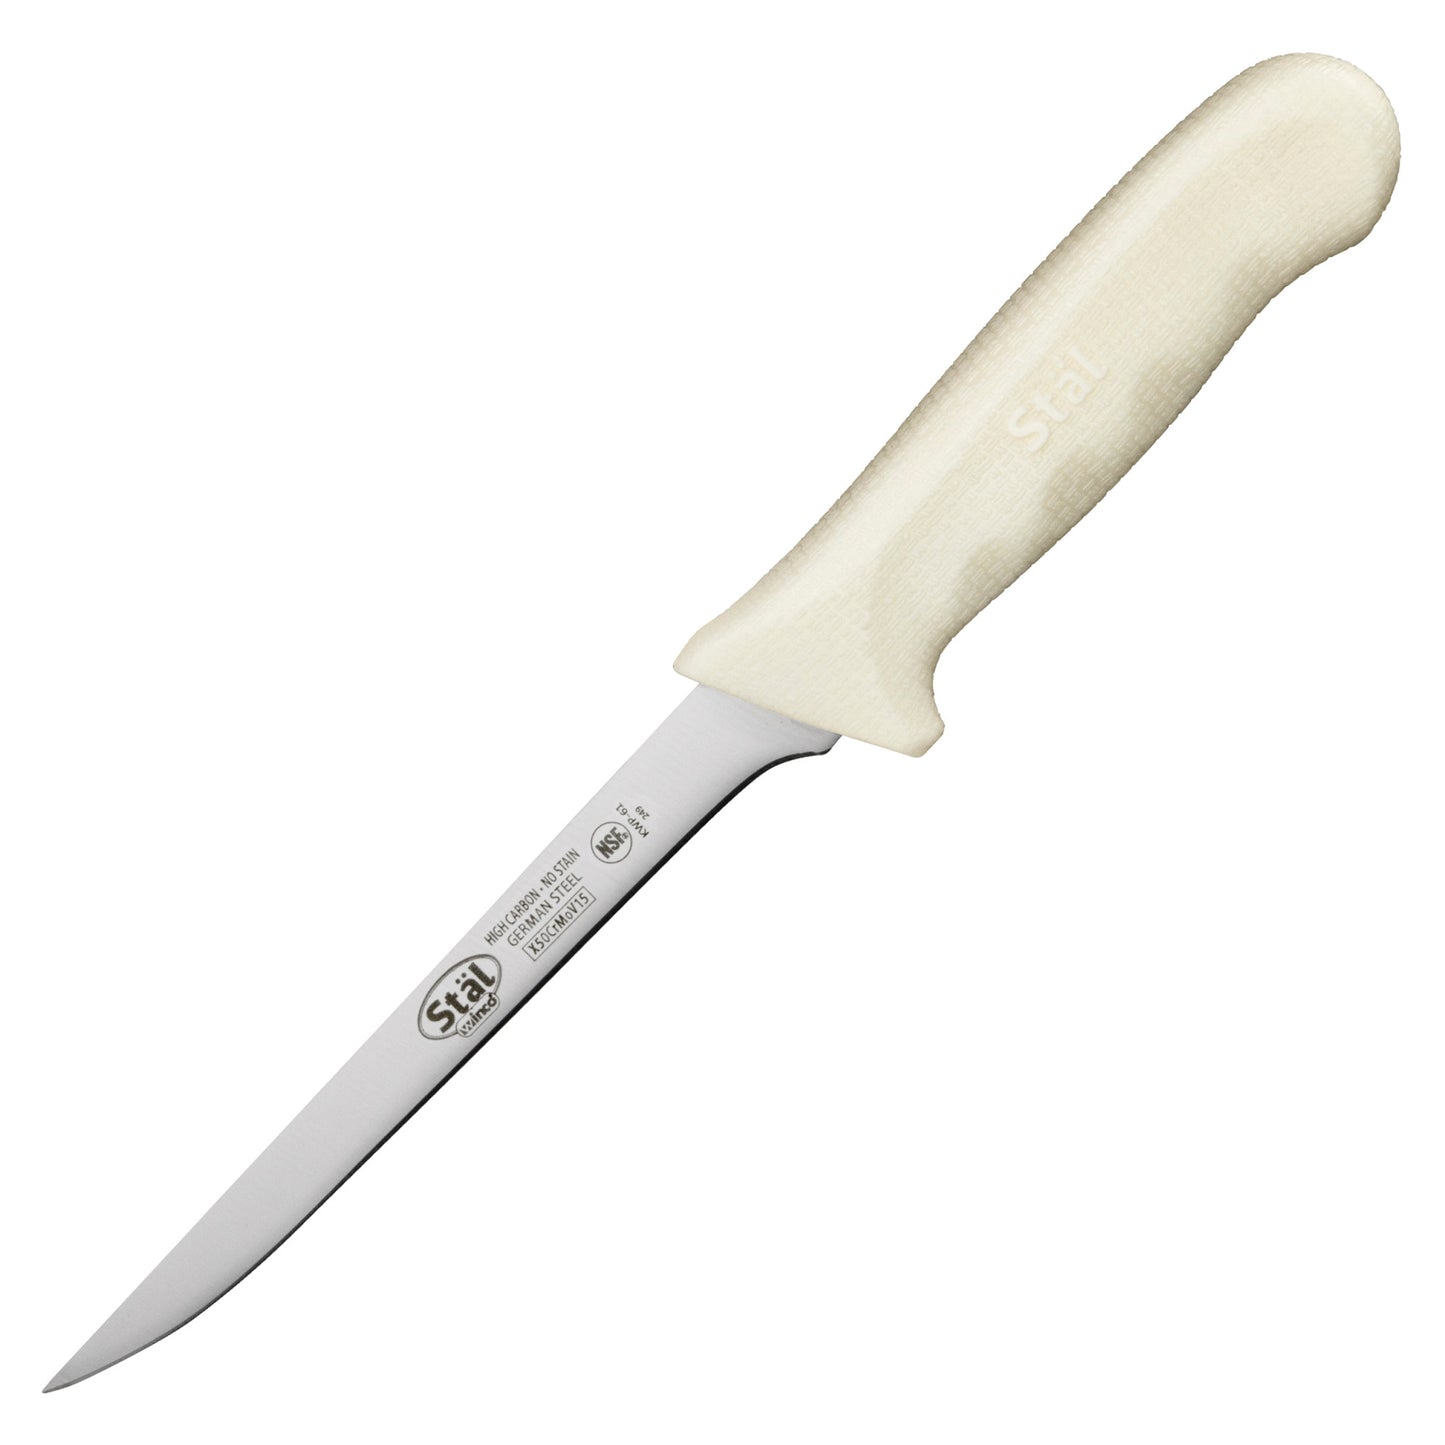 KWP-61 - 6" Boning Knife, White PP Hdl, Narrow